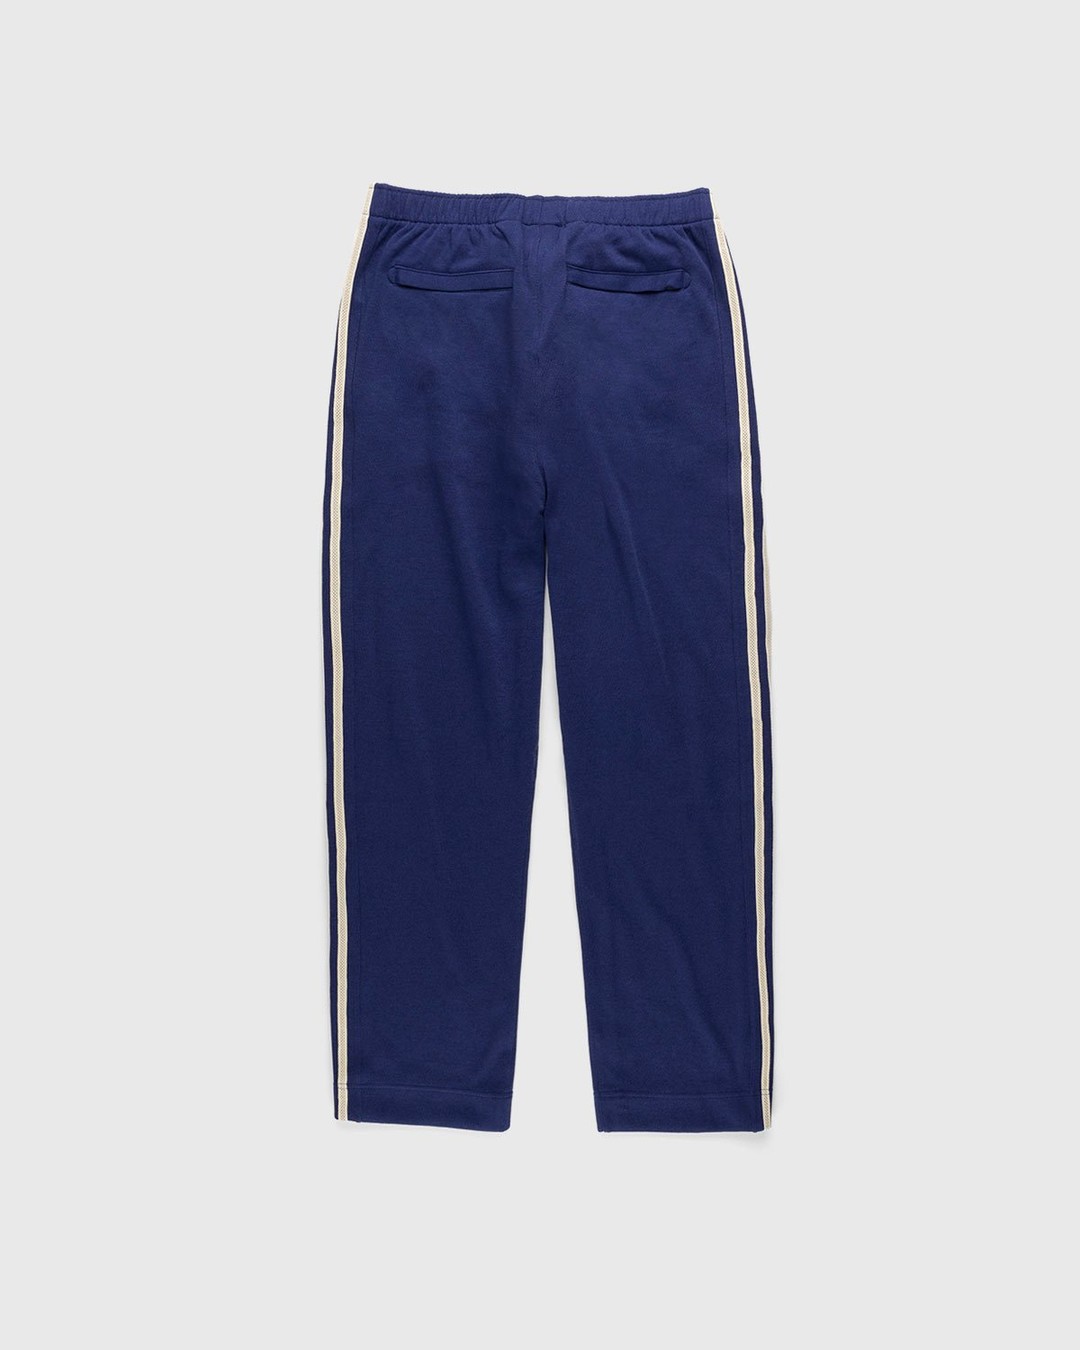 Adidas x Wales Bonner – 80s Track Pants Night Sky - Pants - Blue - Image 2